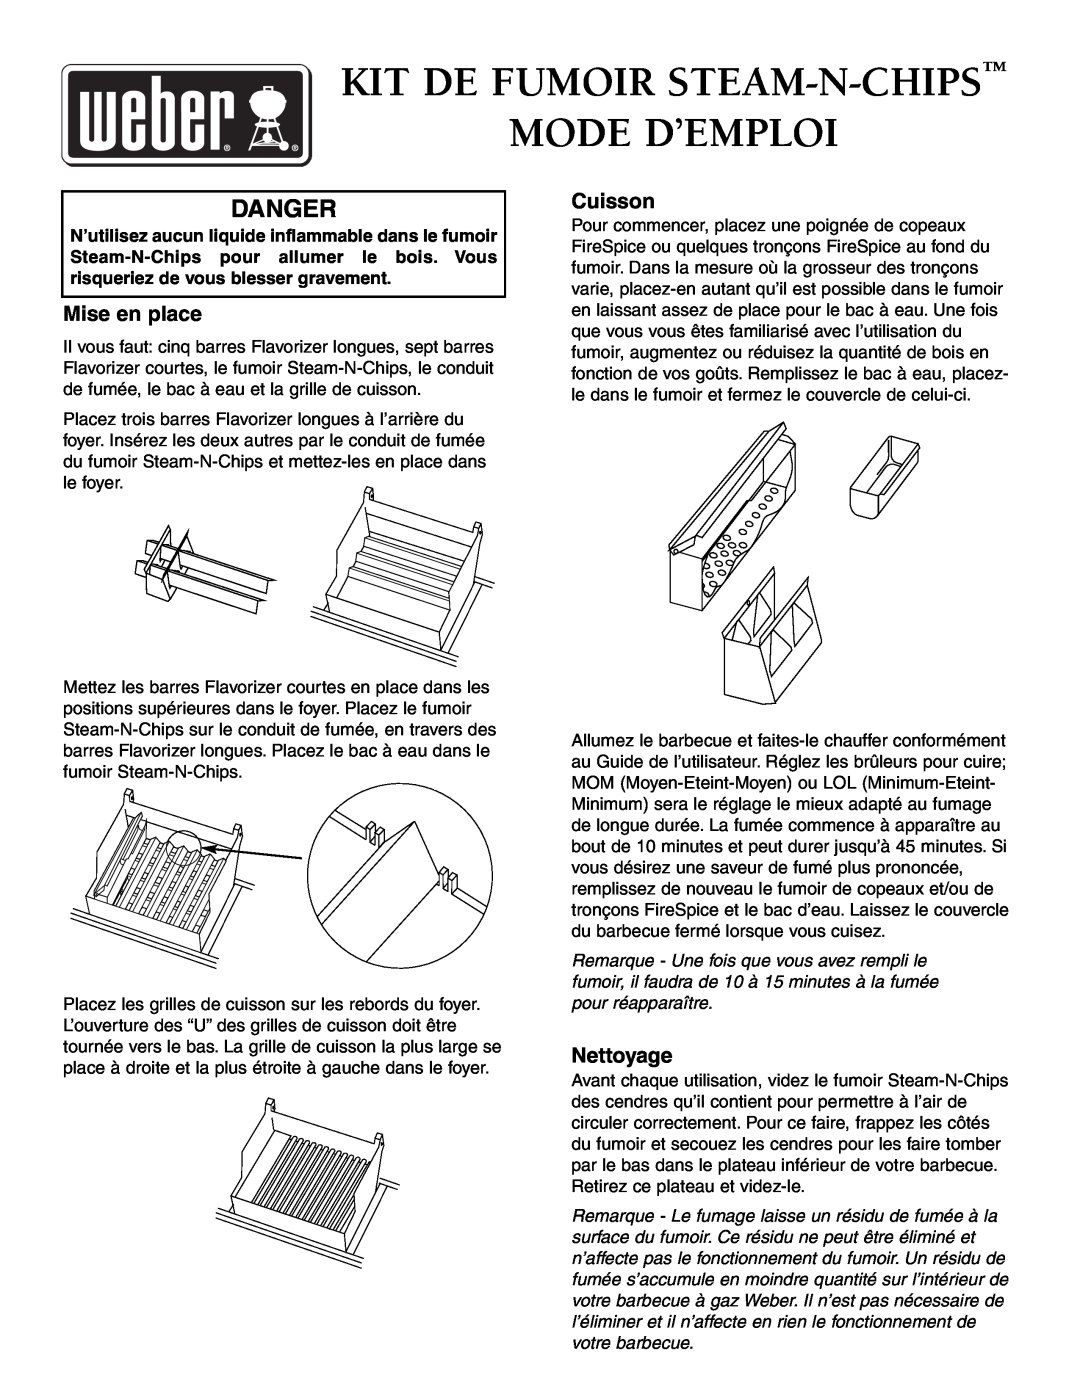 Weber Smoker owner manual Kit De Fumoir Steam-N-Chips Mode D’Emploi, Mise en place, Cuisson, Nettoyage, Danger 